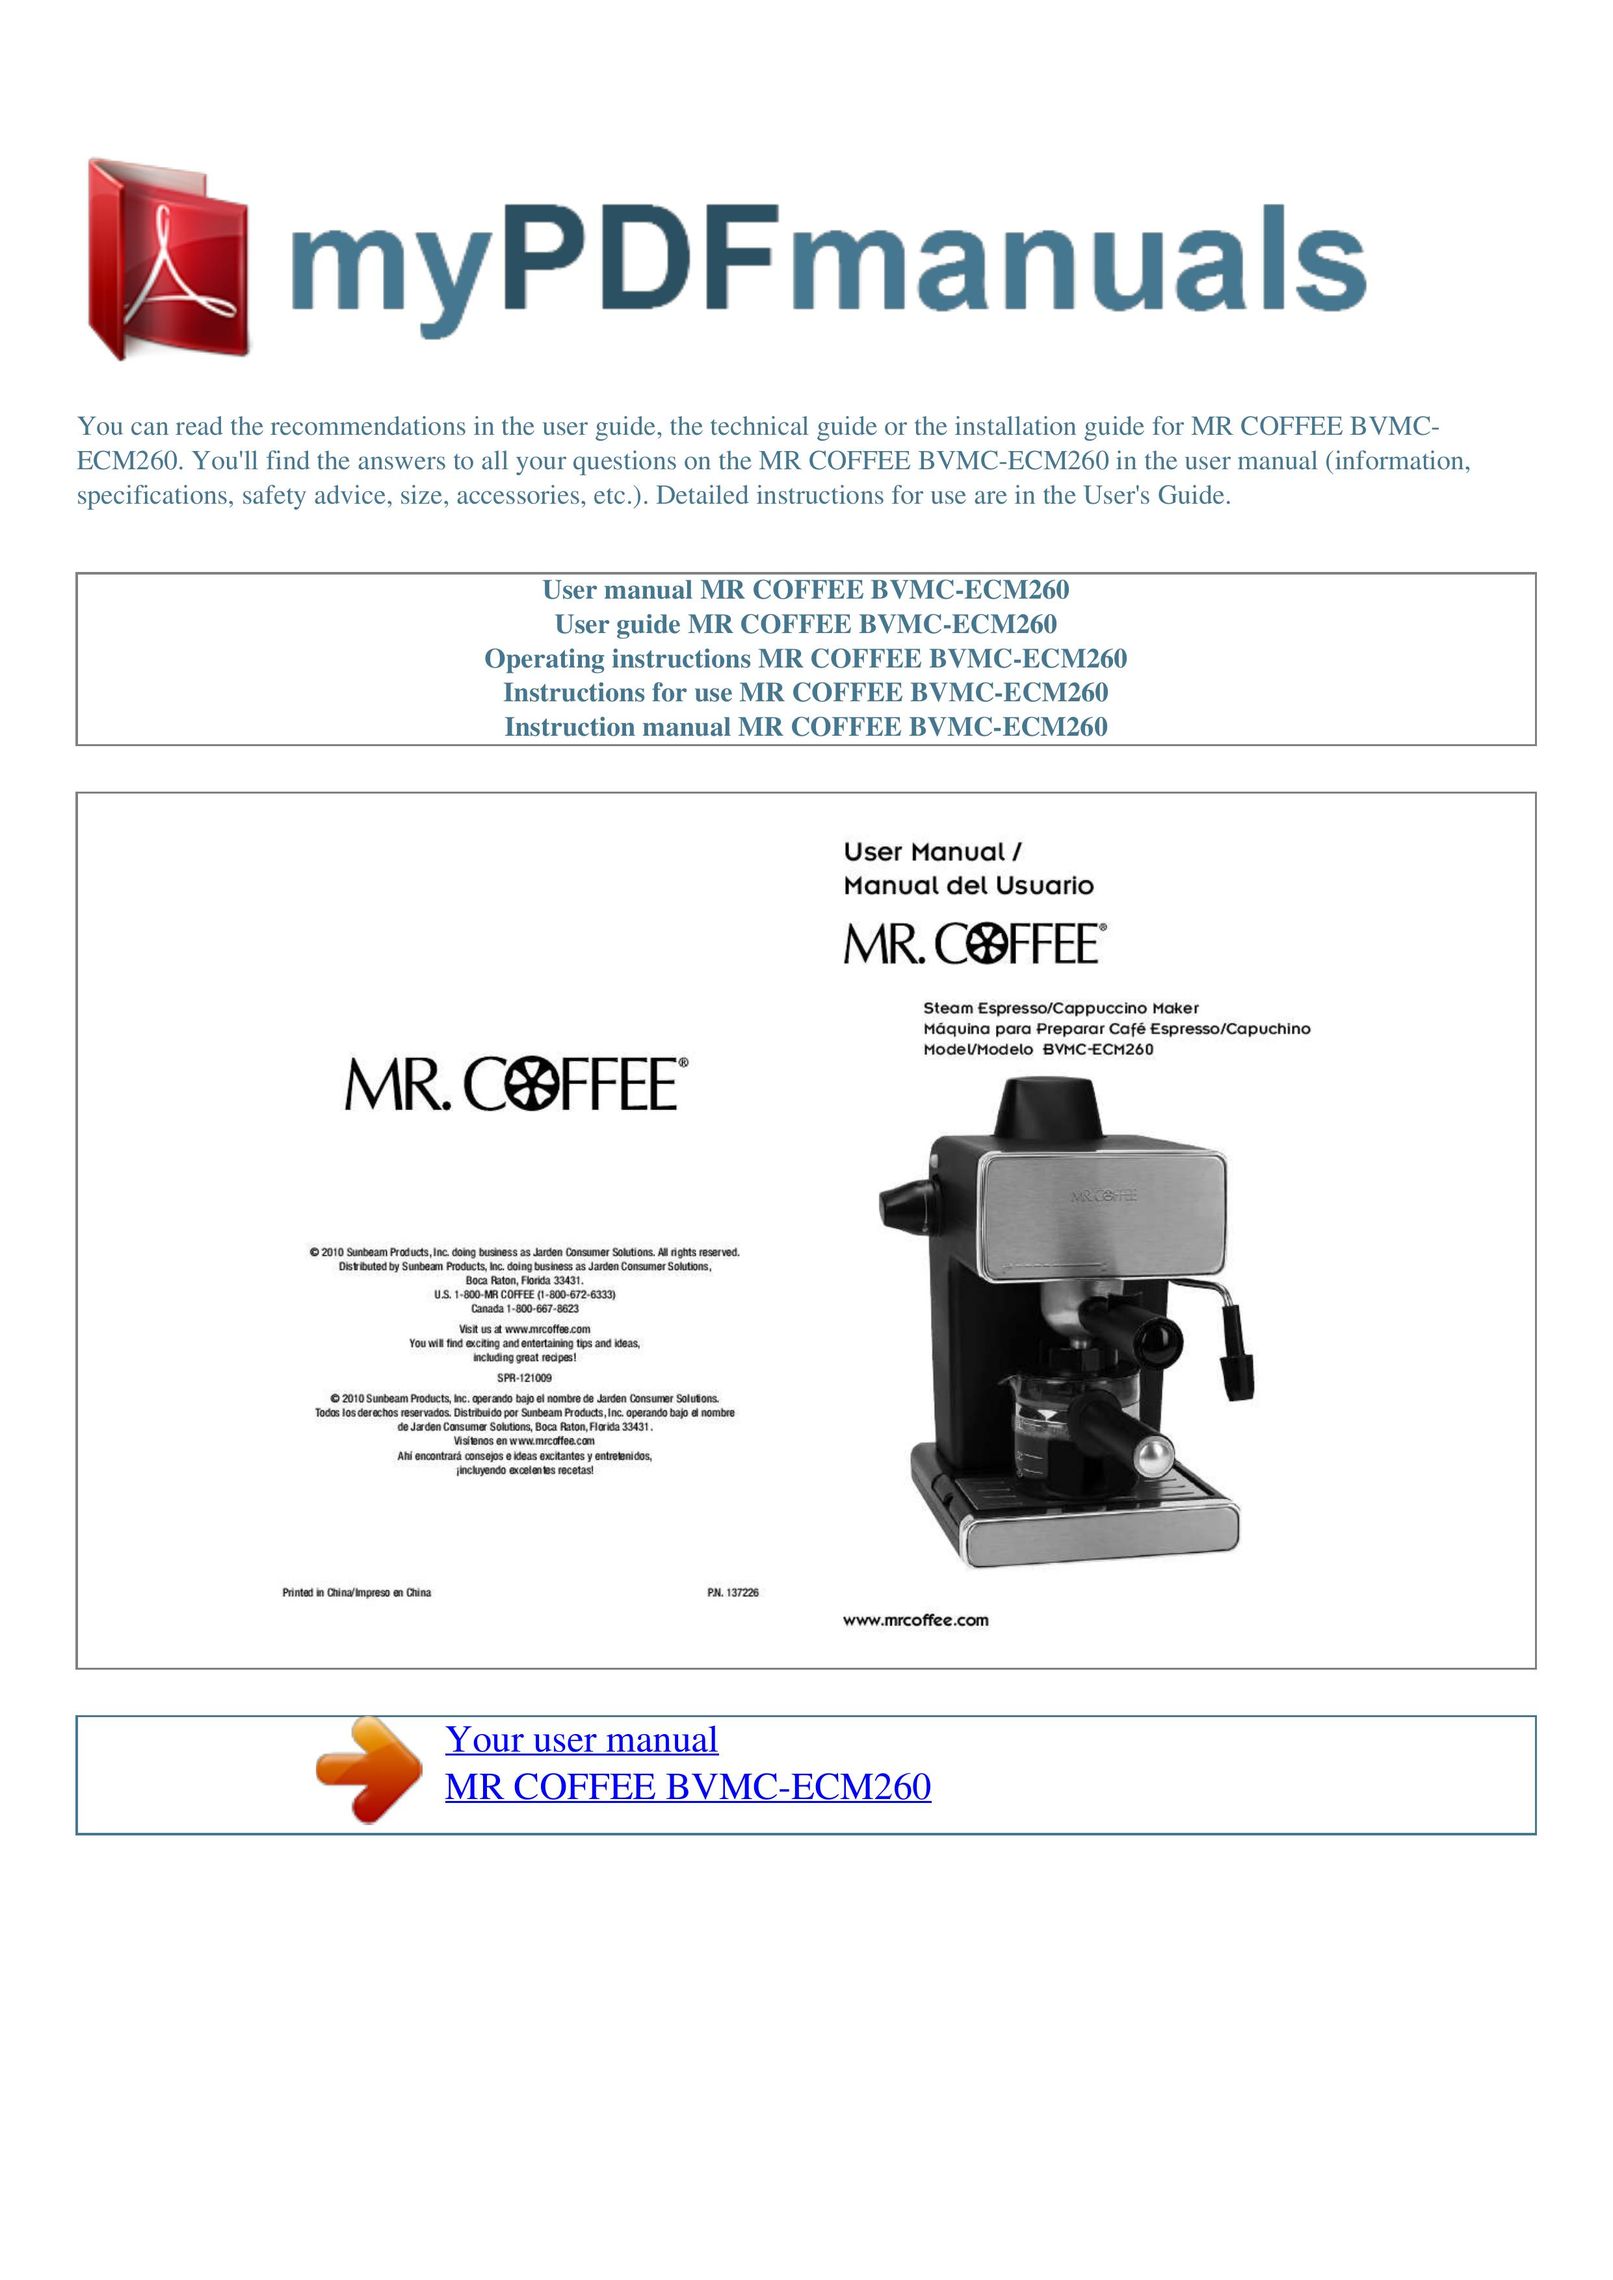 Mr. Coffee BVMC-ECM260 Coffeemaker User Manual